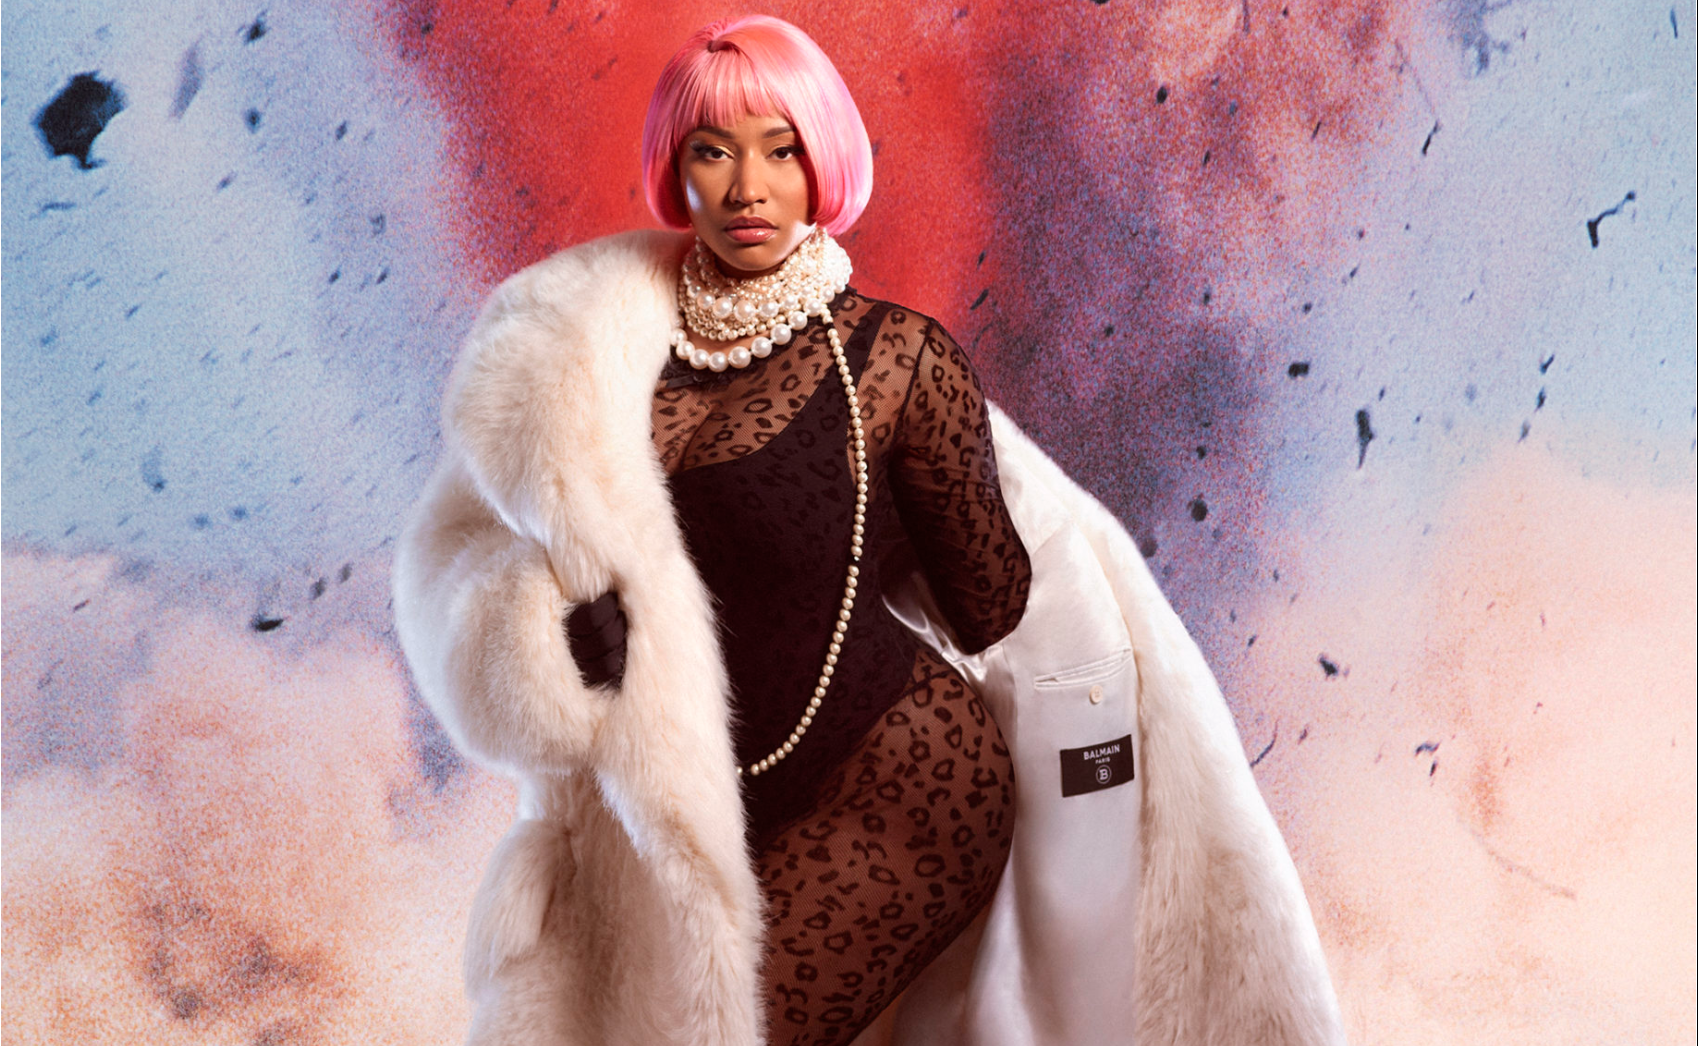 Bumped Fucking Sexy Video - Nicki Minaj, in Conversation With Jada Pinkett Smith